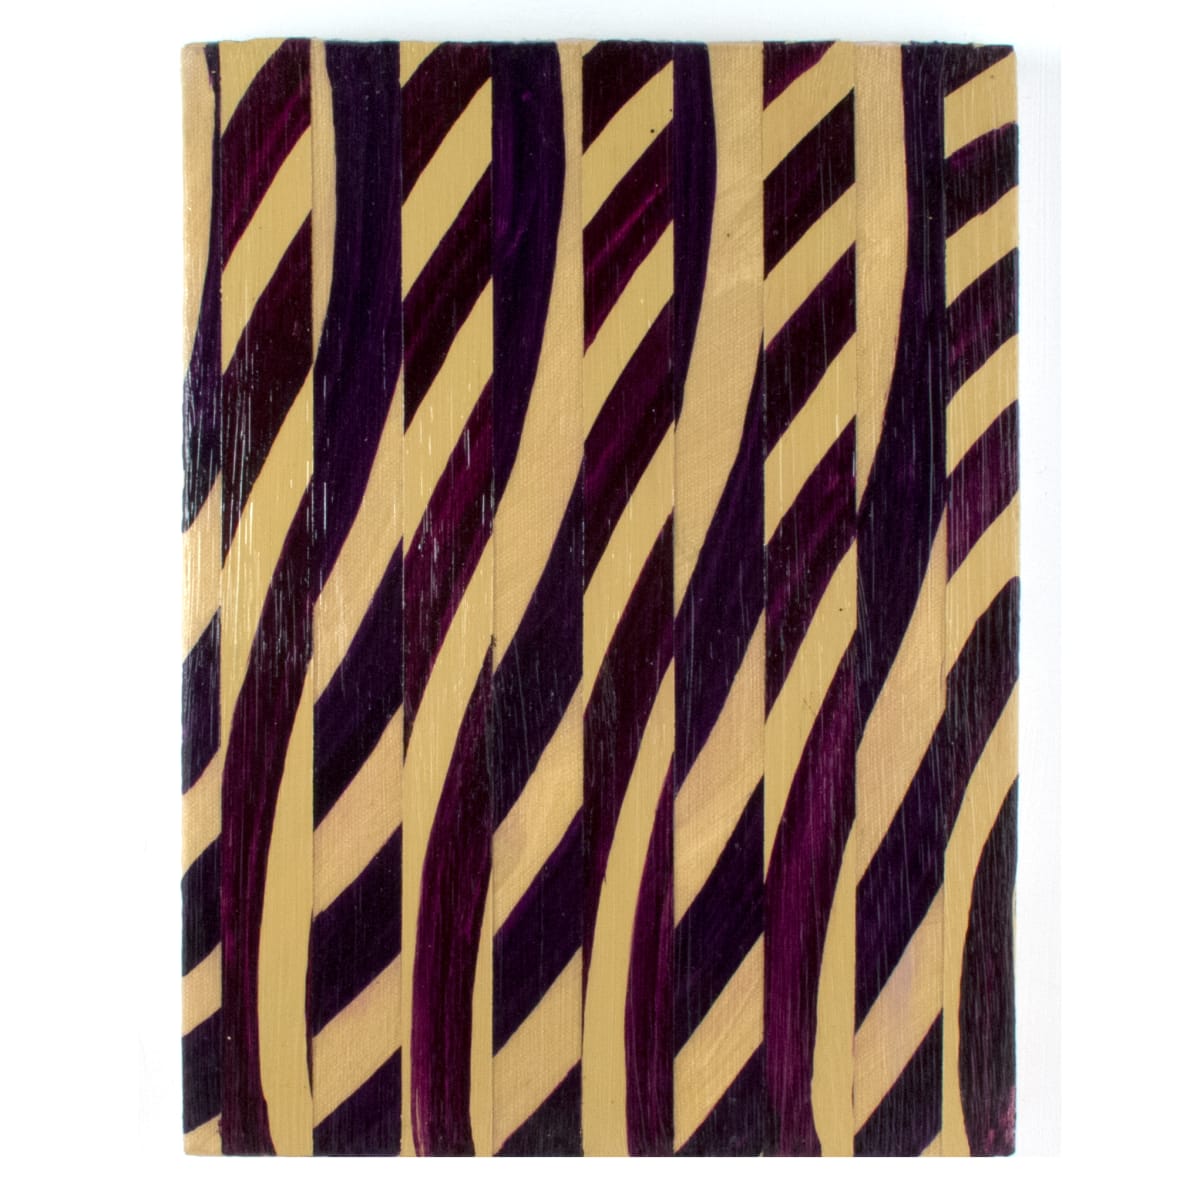 Waveforms 7:Violet by Bruce Price  Image: Waveforms 7:Violet
acrylic on canvas
12"x9"